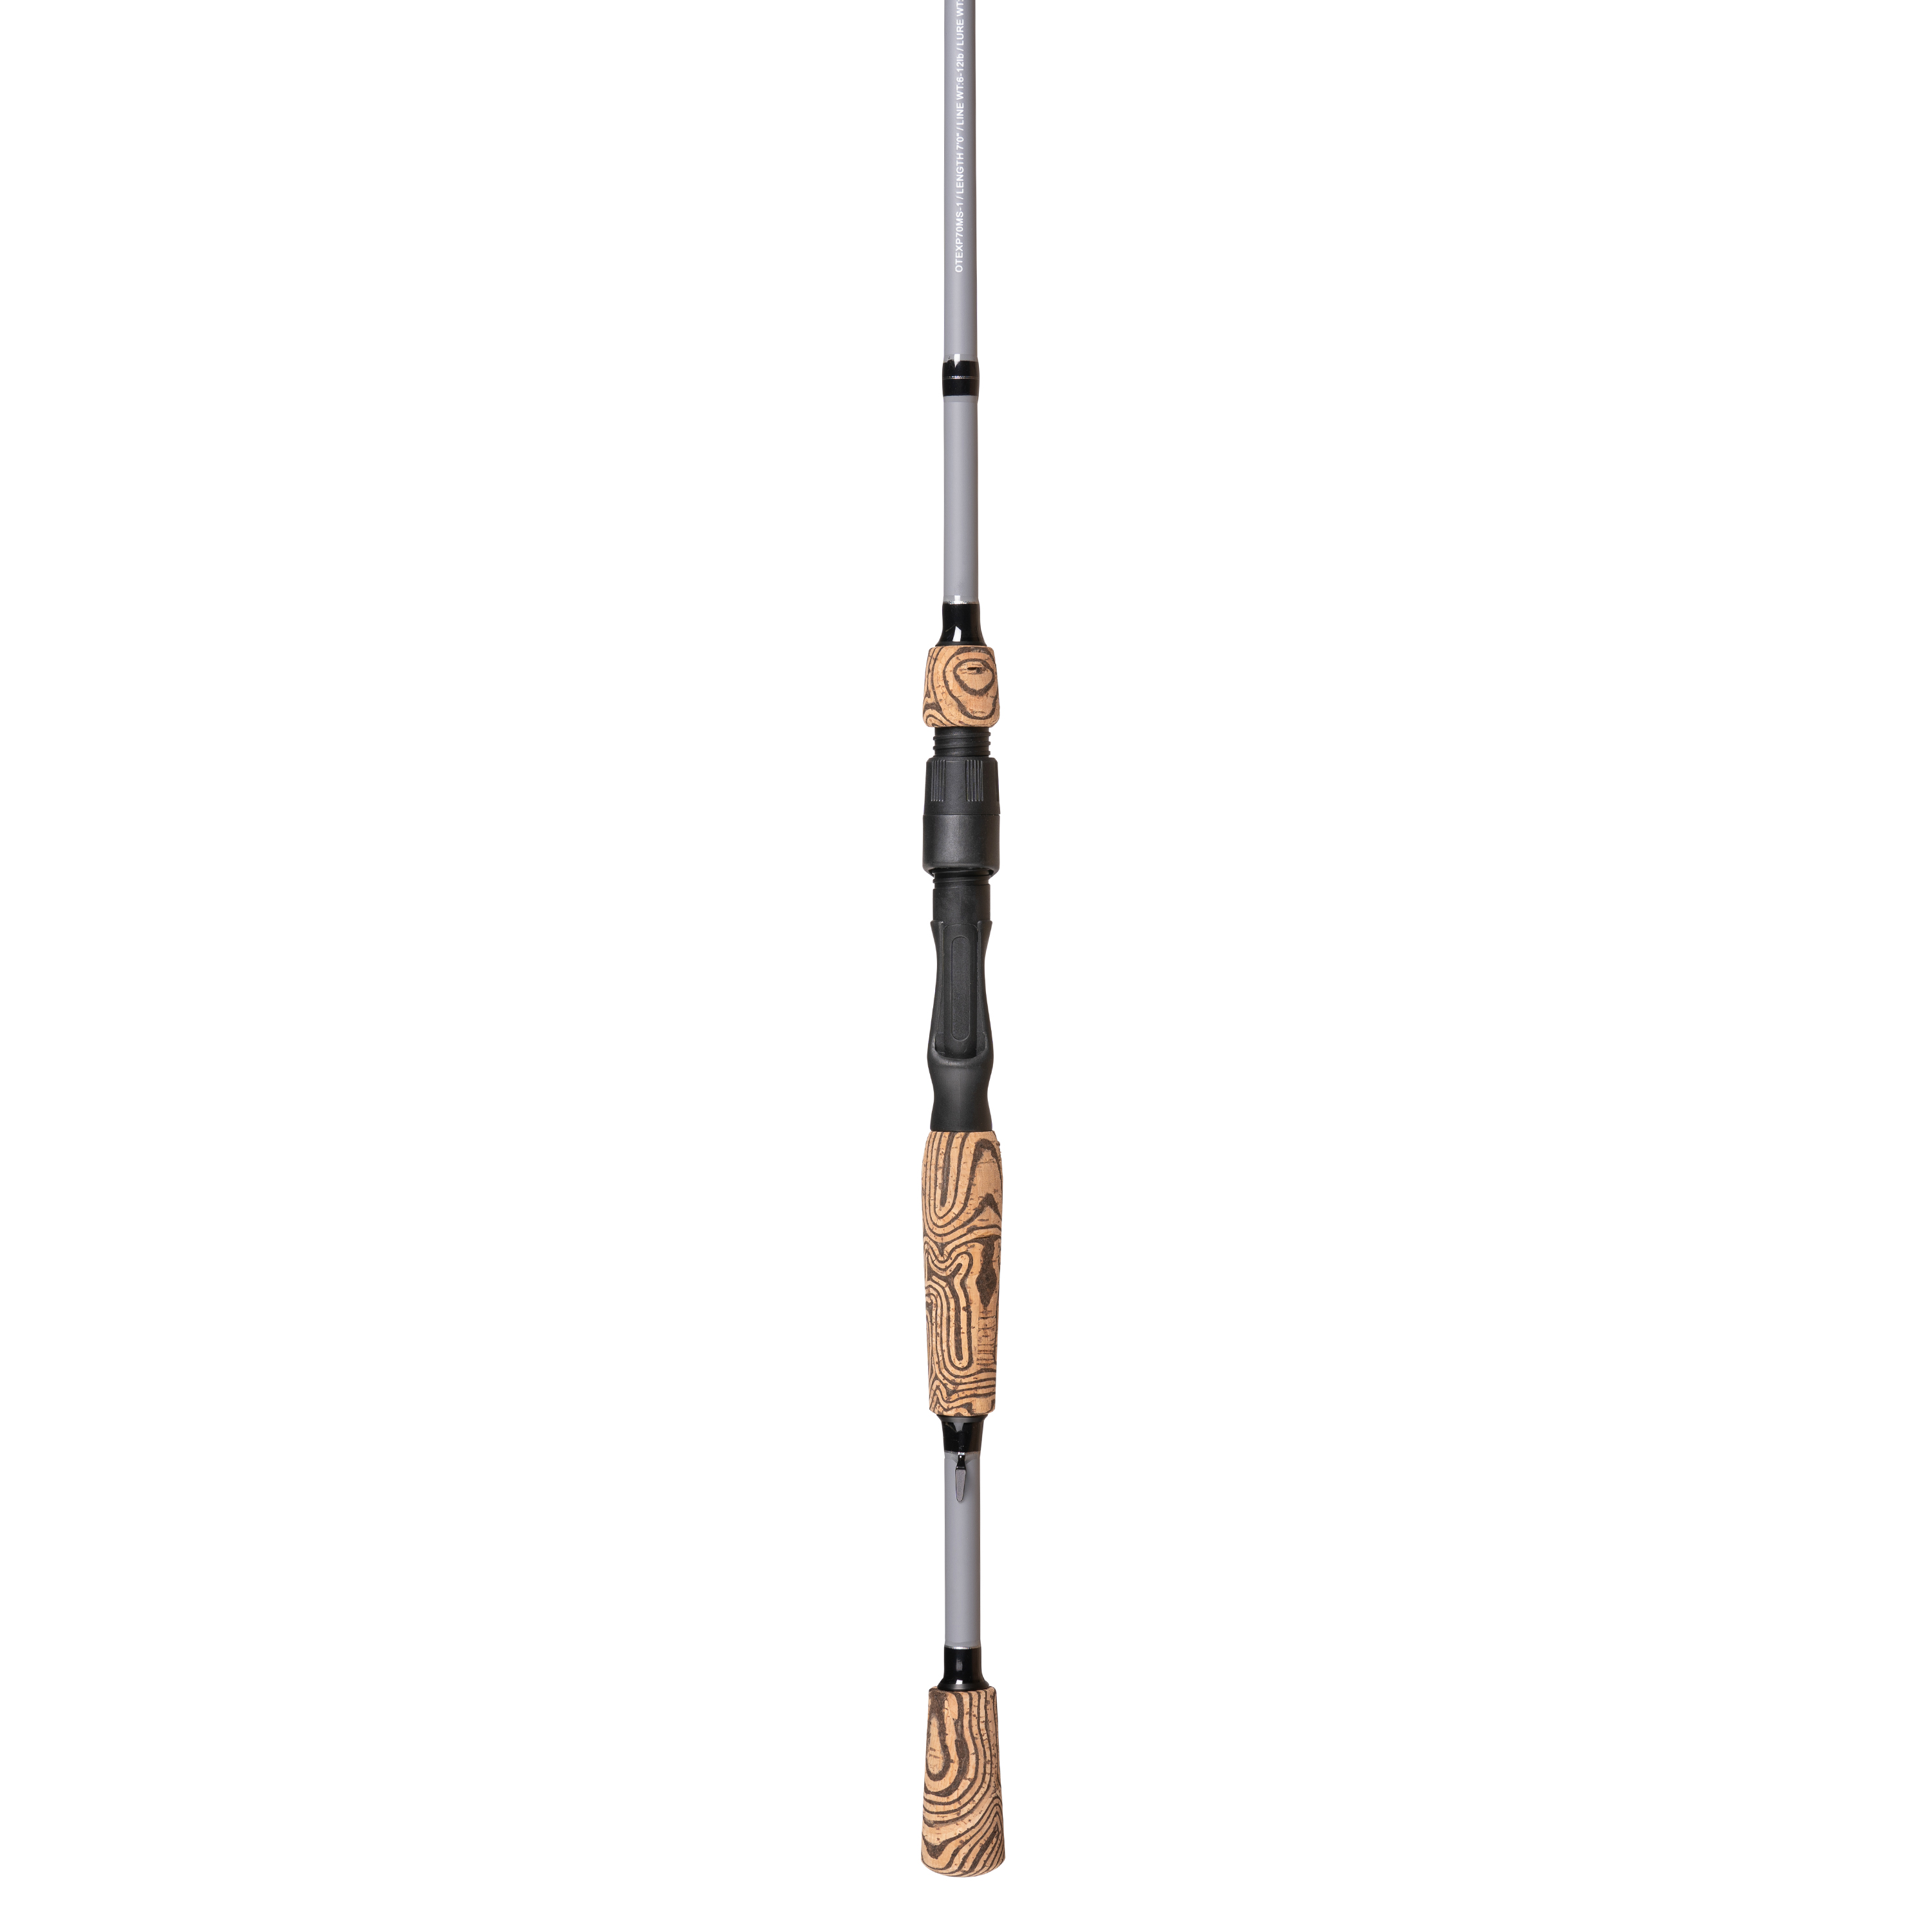 Ozark Trail OTX Spinning Fishing Rod, Medium Action, 7ft - image 5 of 6